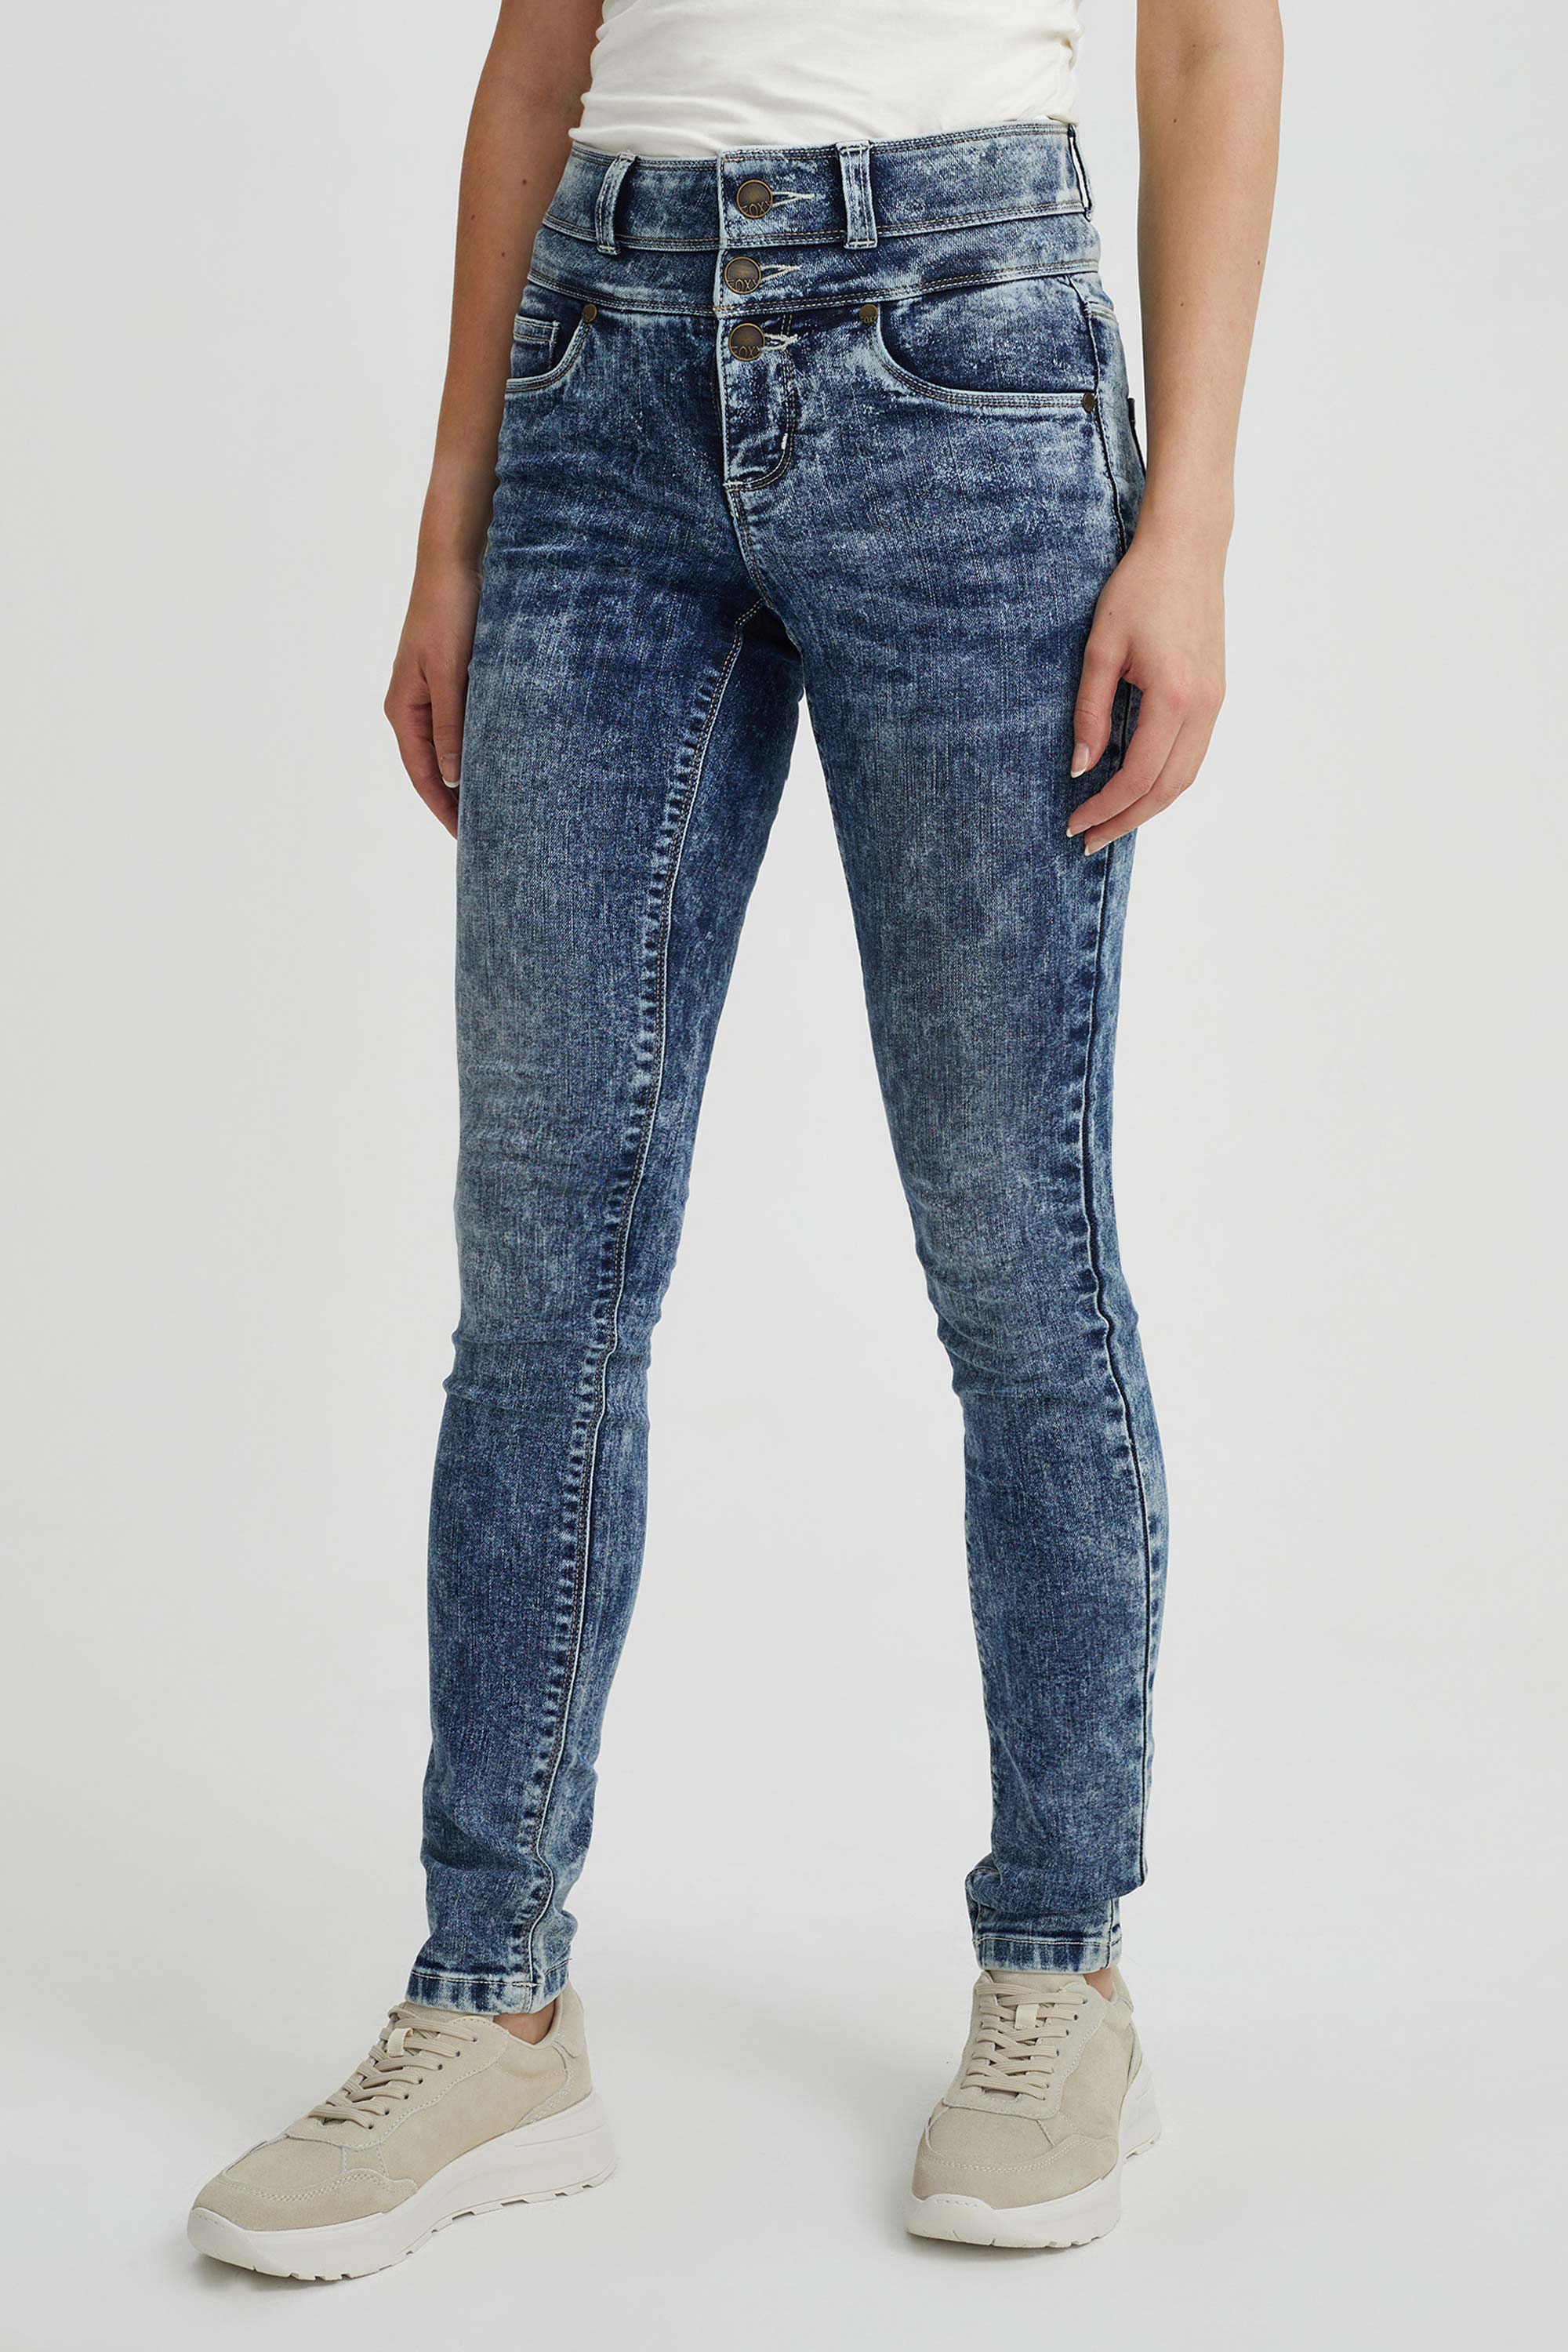 Jeans Mia Skinny high waist